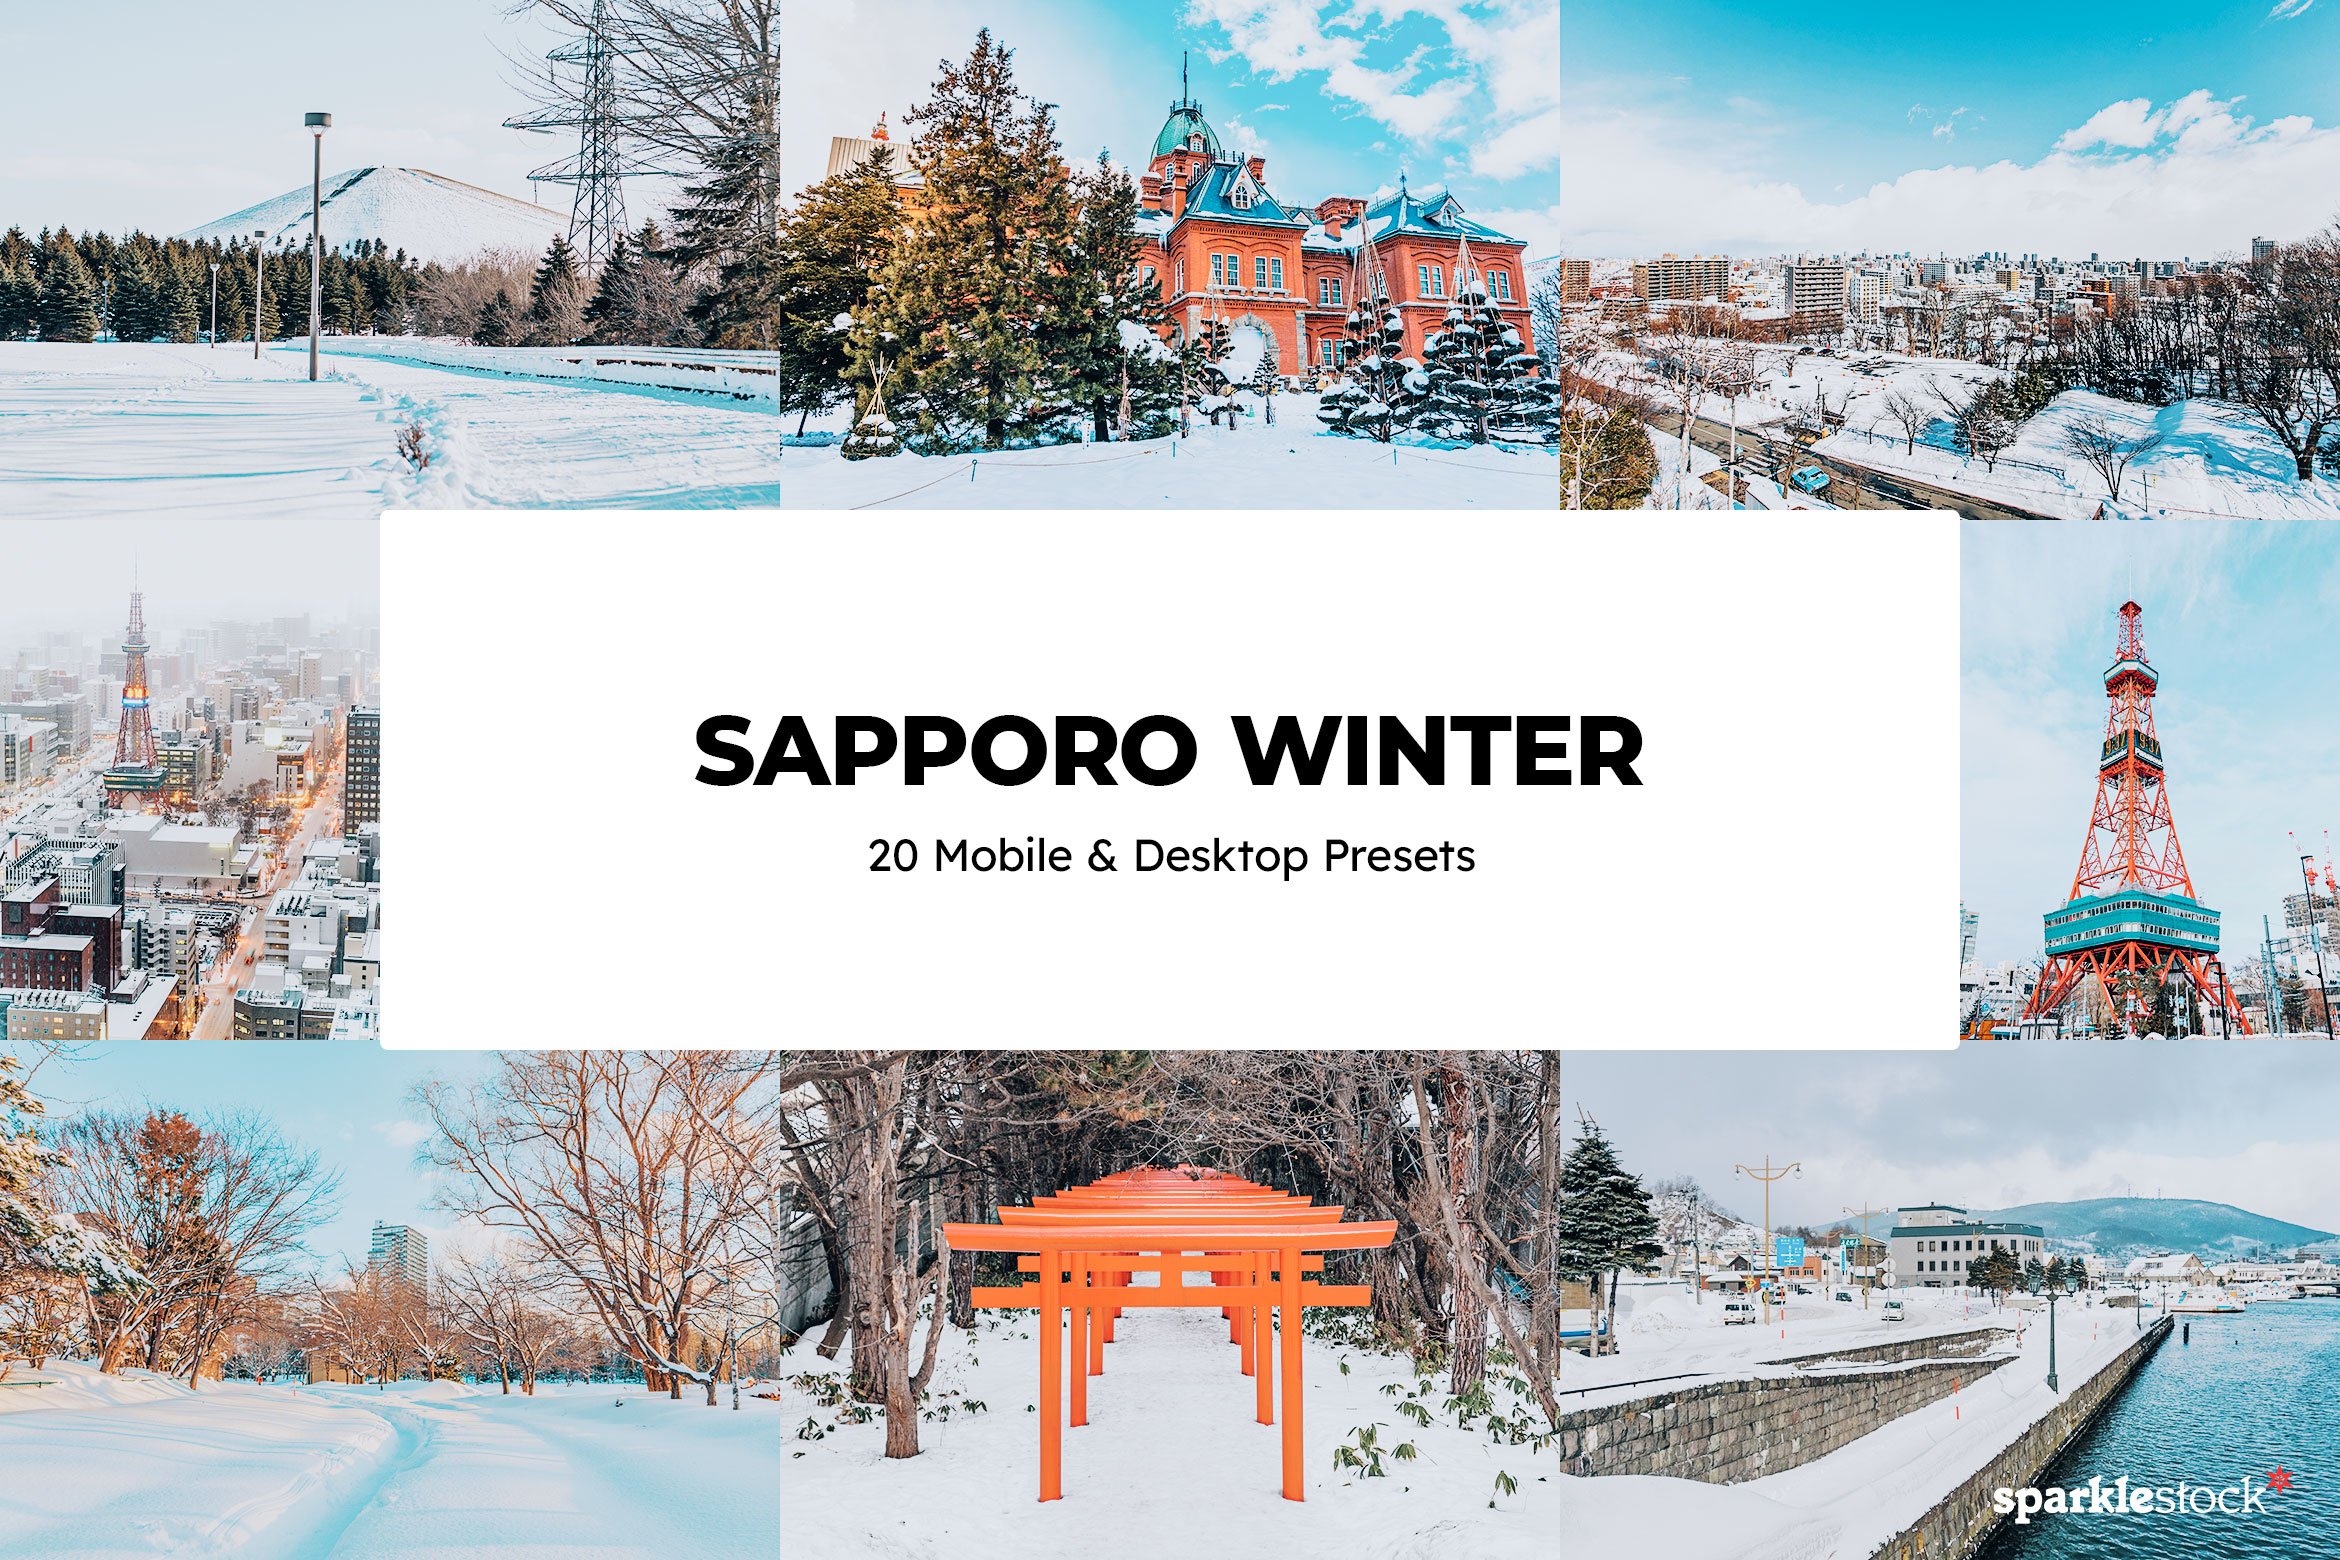 20 Sapporo Winter Lightroom Presetscover image.